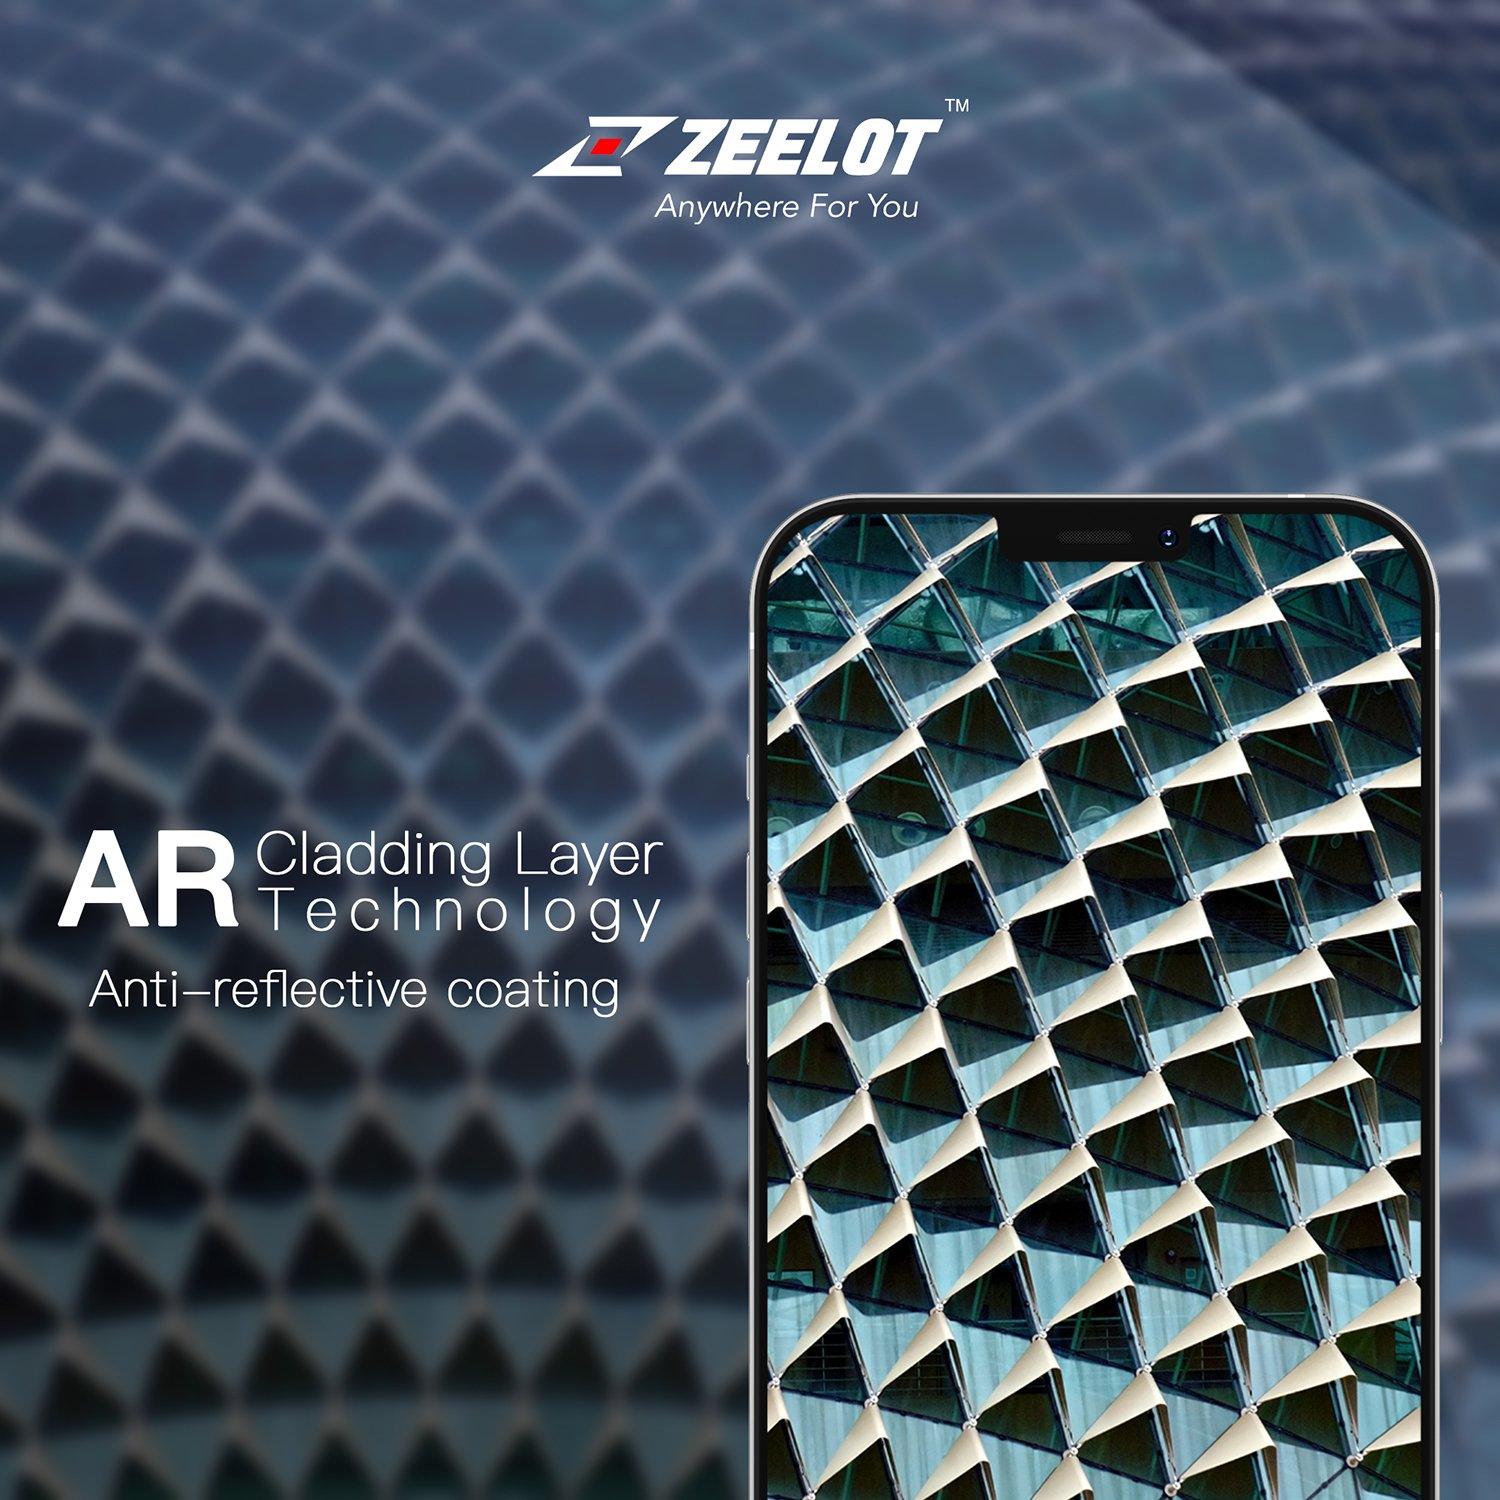 ZEELOT Titanium Steel Diamond design with Lens Protector for iPhone 11 Pro 5.8"/11 Pro Max 6.5"(Three Cameras), Silver Default Zeelot 